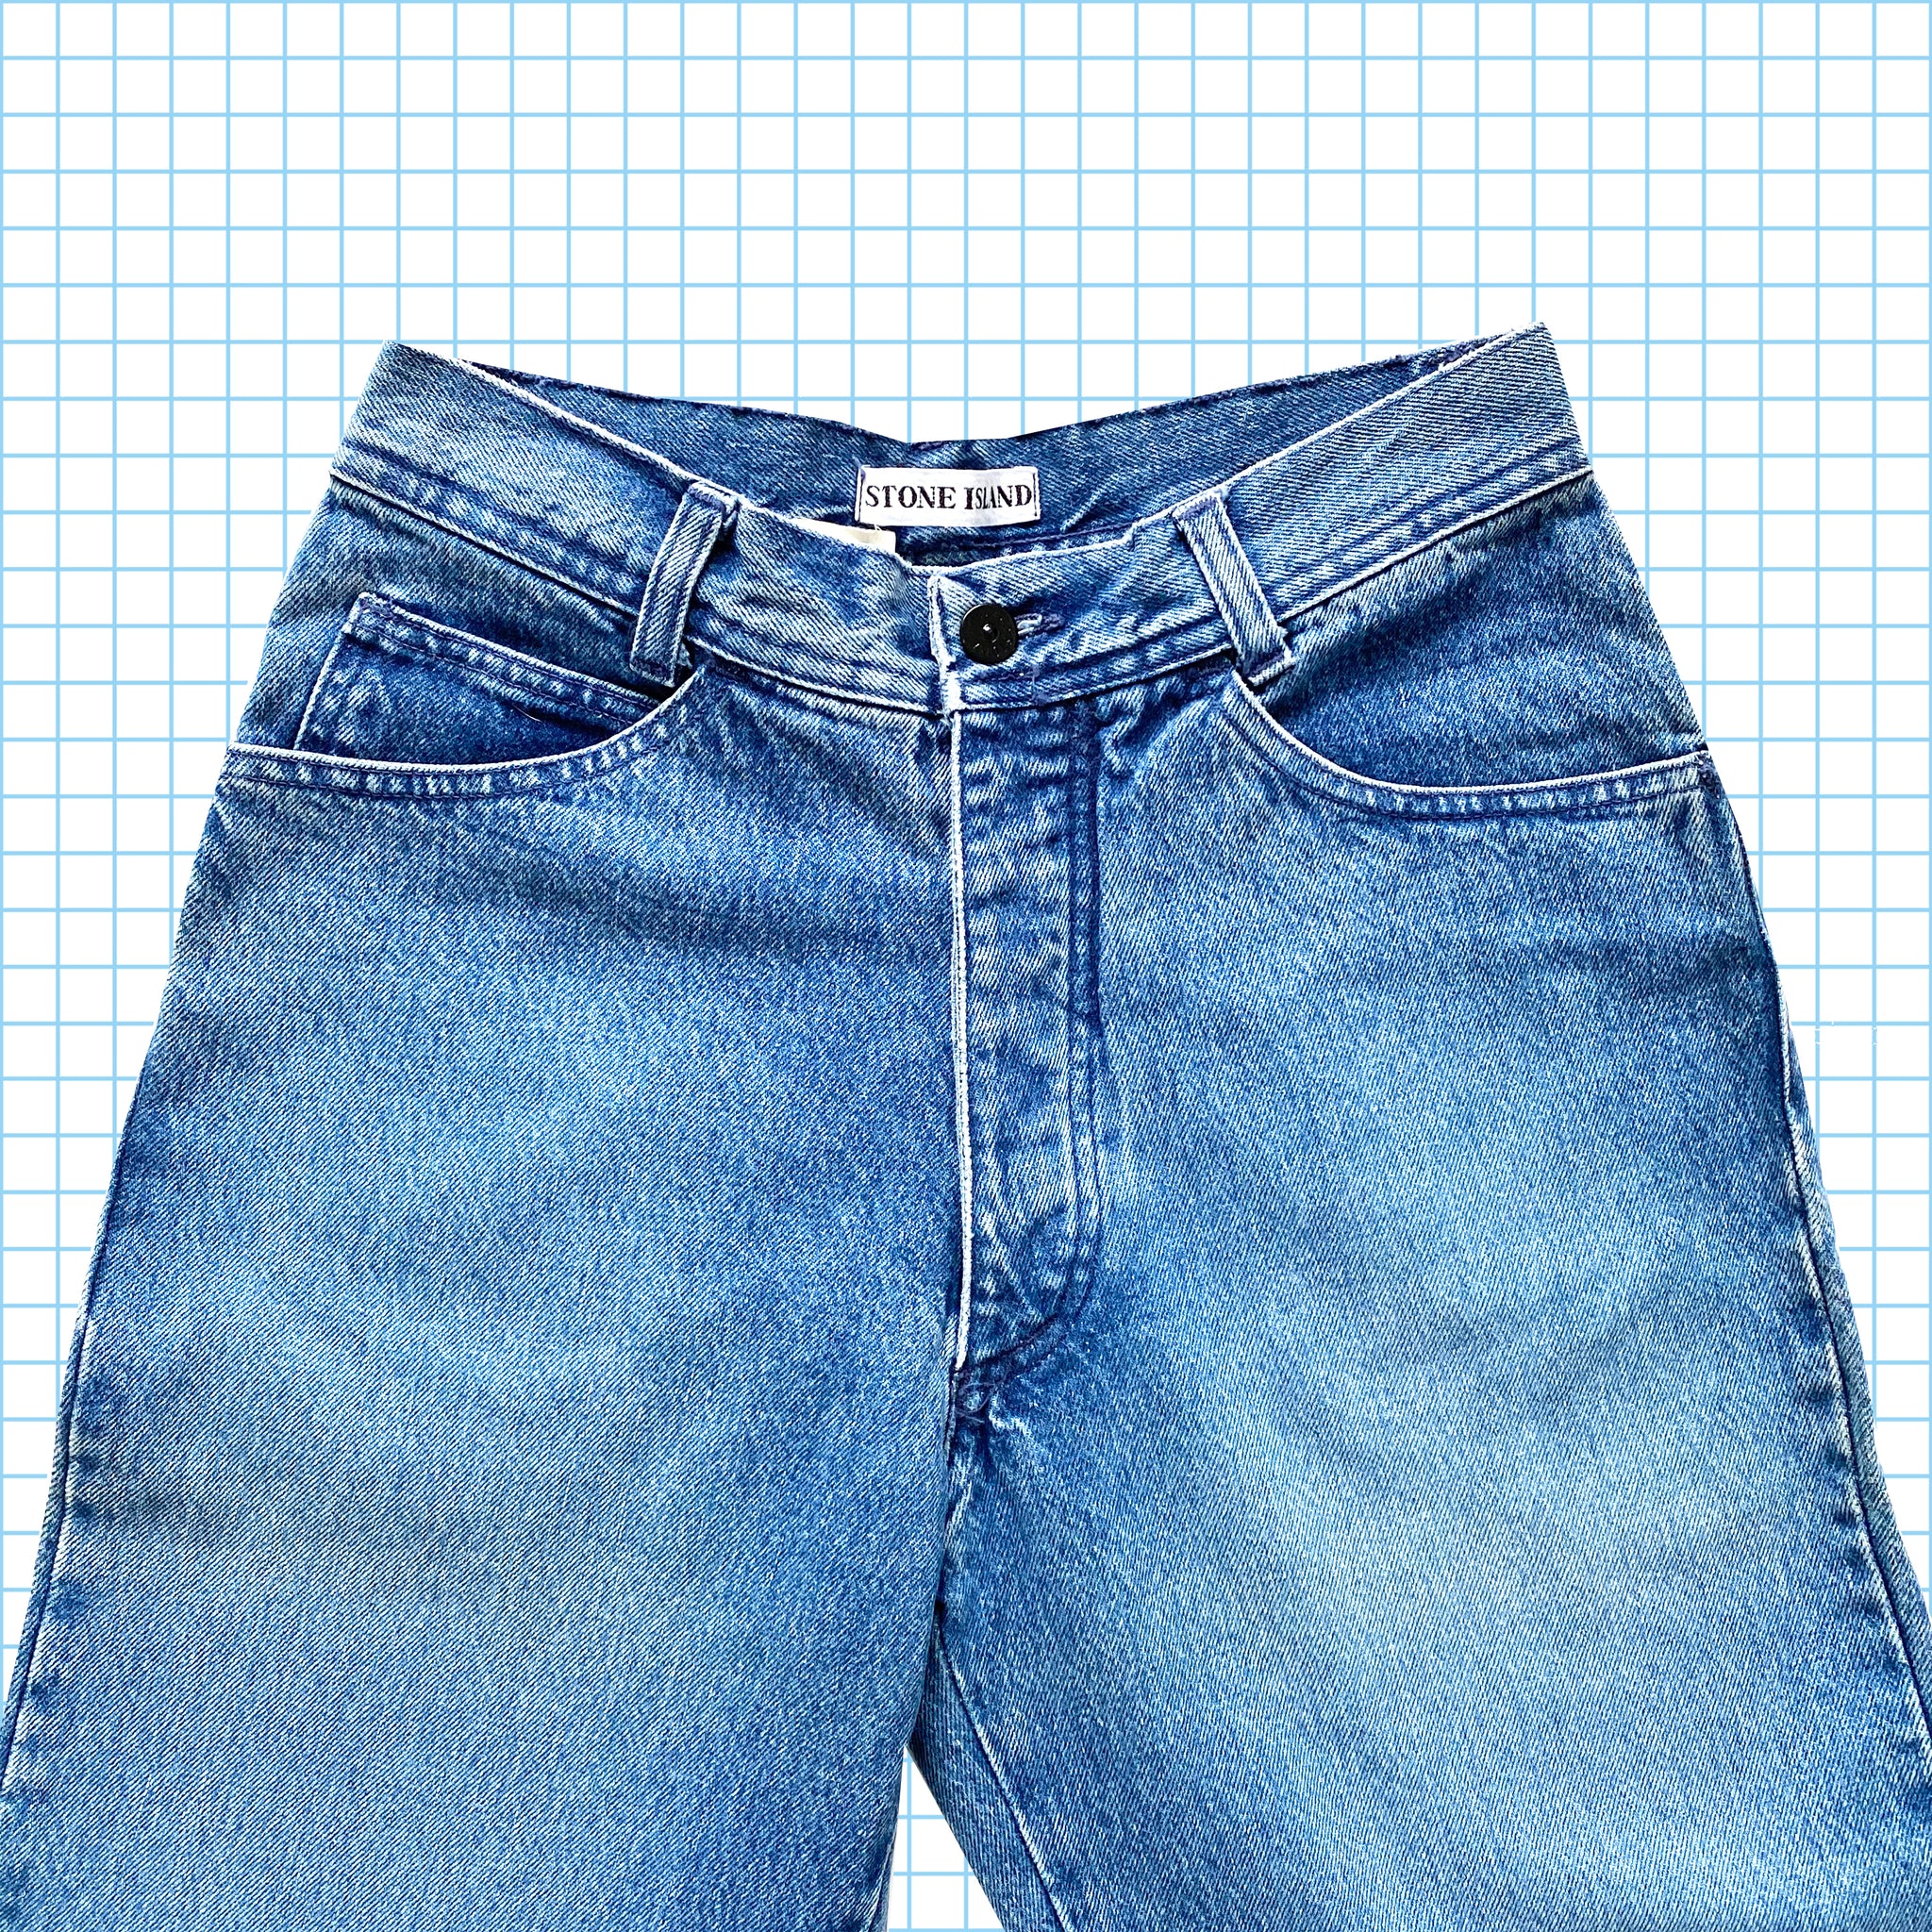 Stone Island 5 pocket denim jeans | Denim jeans shop, Denim jeans, Clothes  design